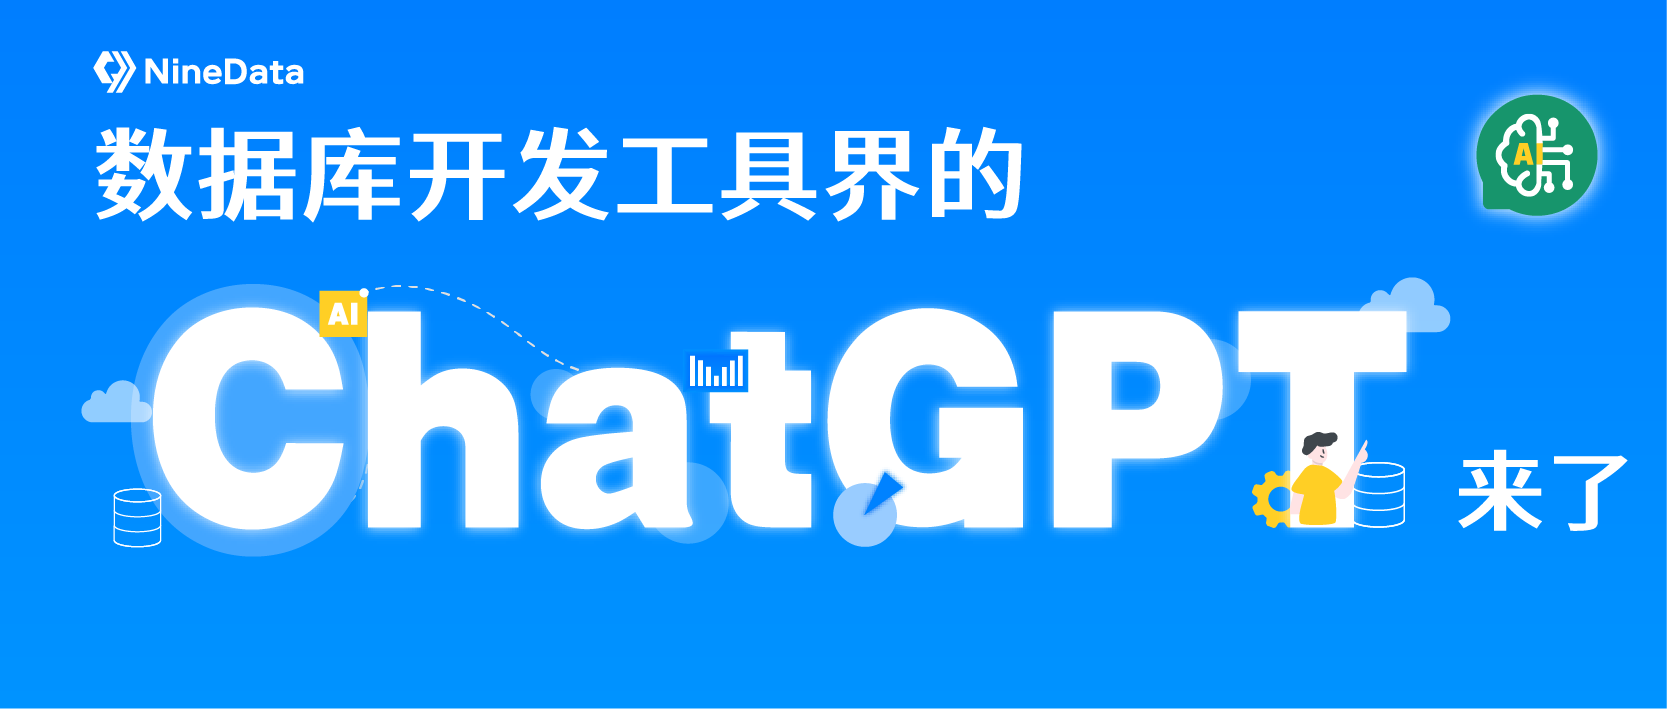 NineData 发布数据库开发工具界的 ChatGPT.png